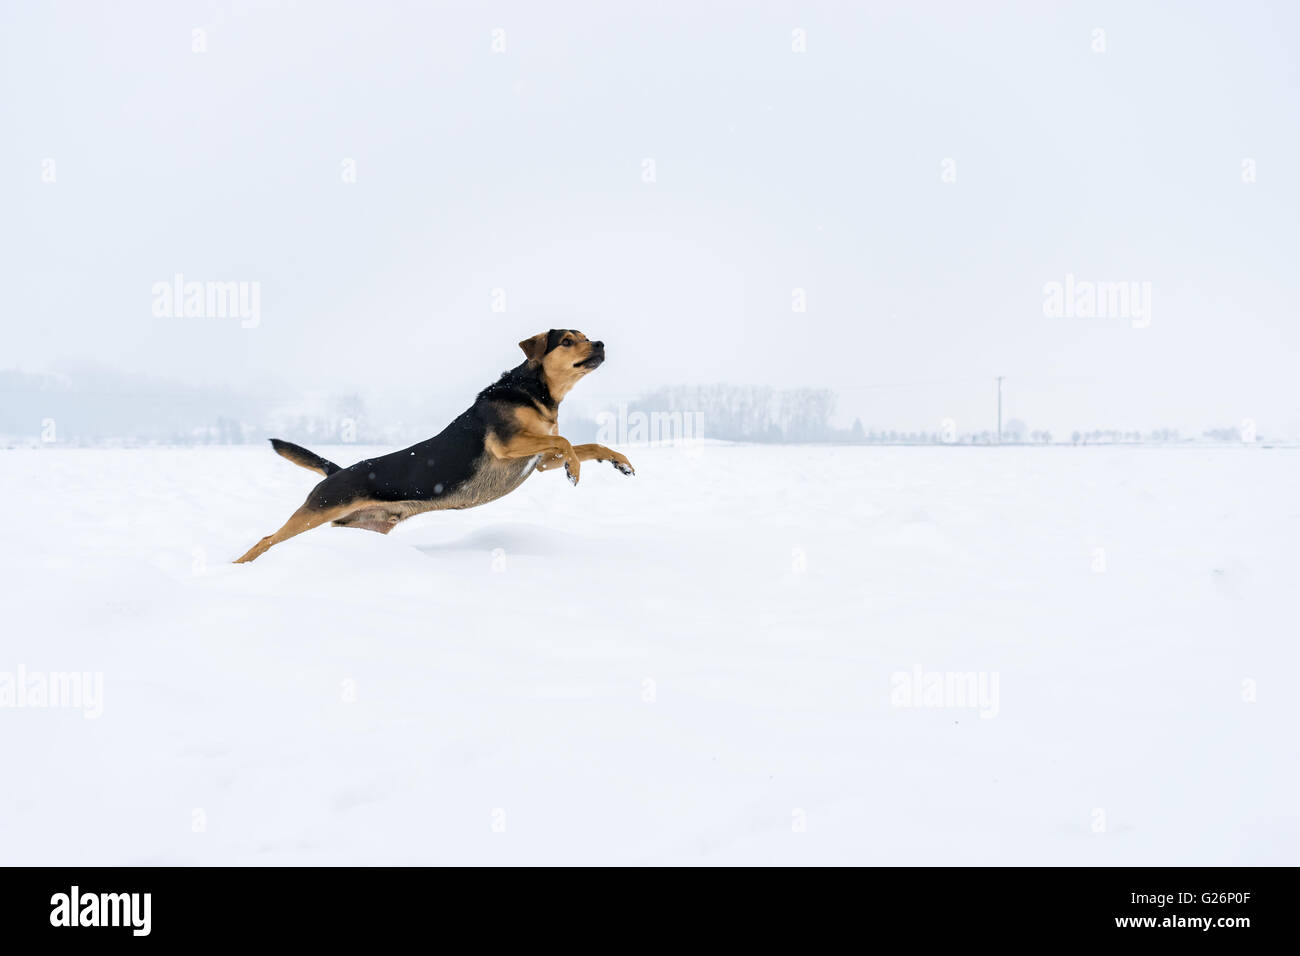 Jumping cane nella neve Foto Stock